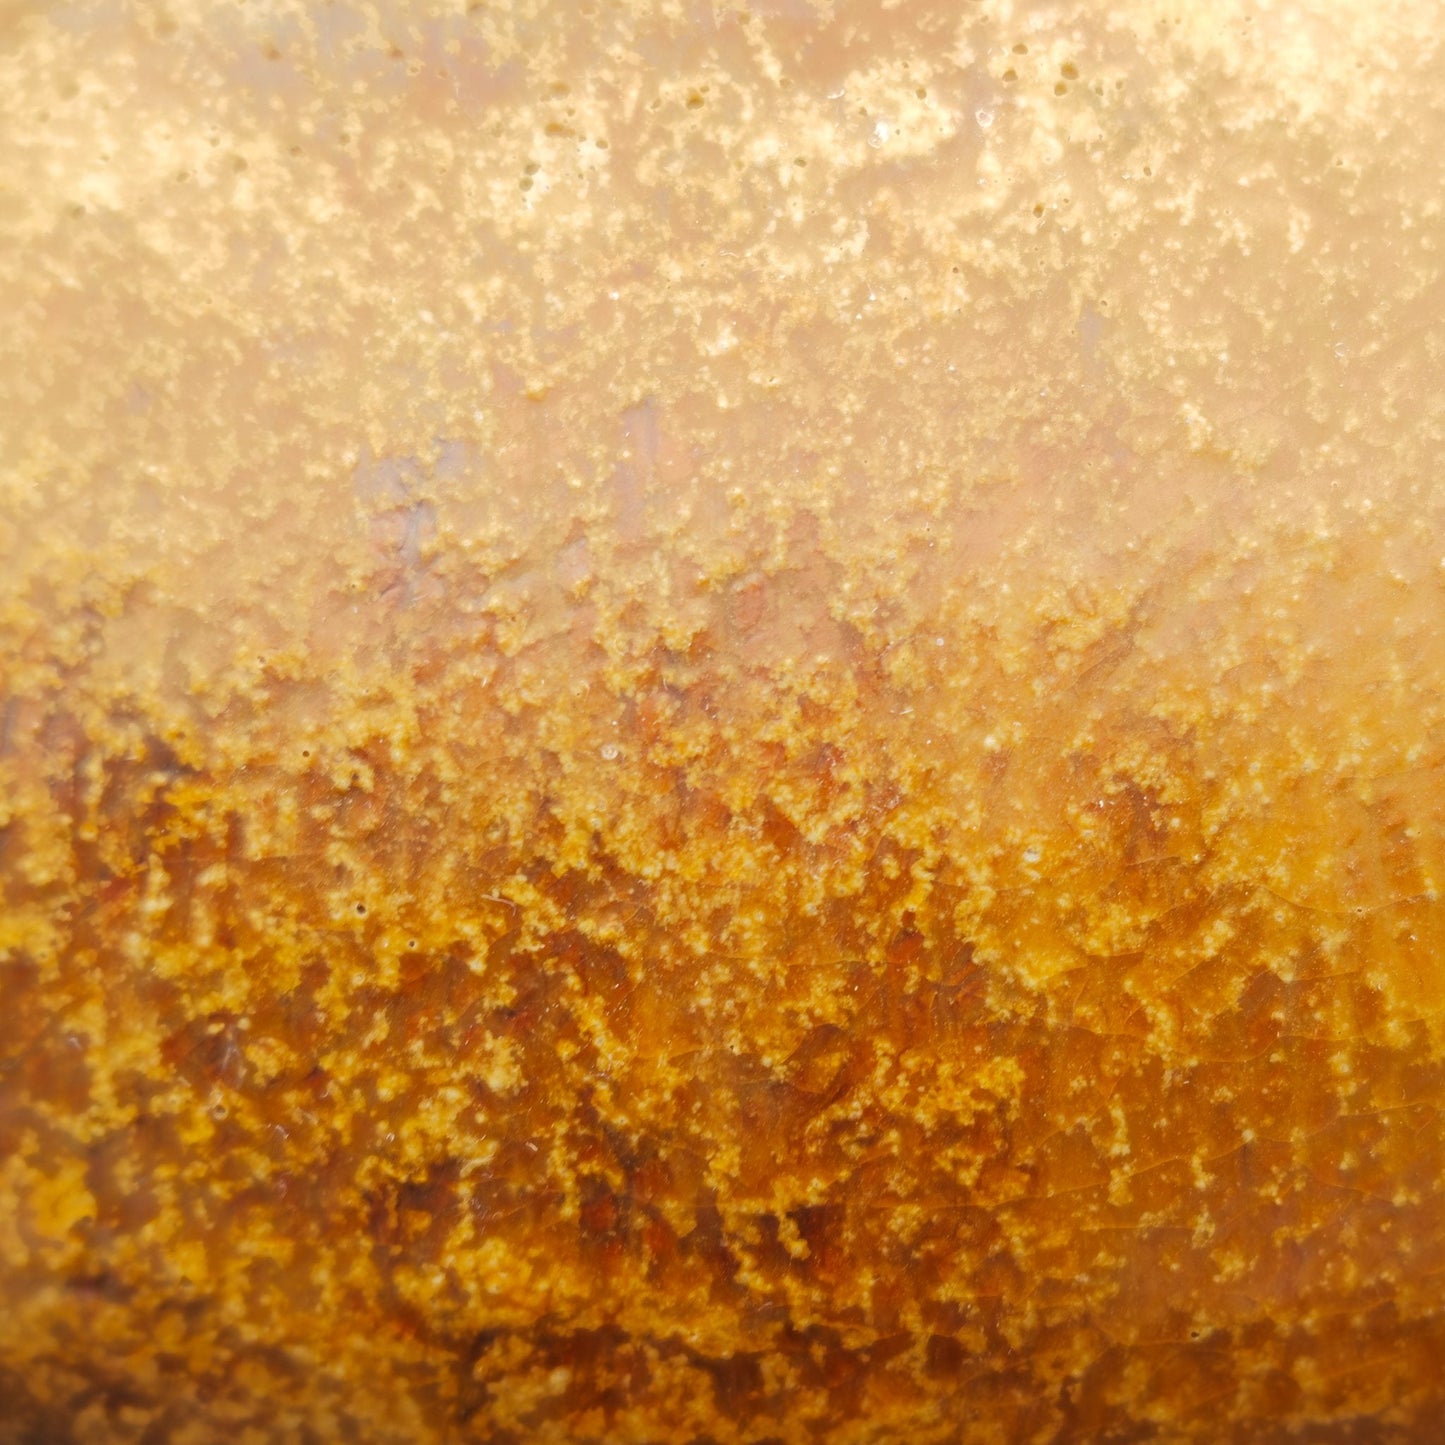 KNABSTRUP Brown Glazed Scales Mushroom Stoneware Vase Mollaris.com 